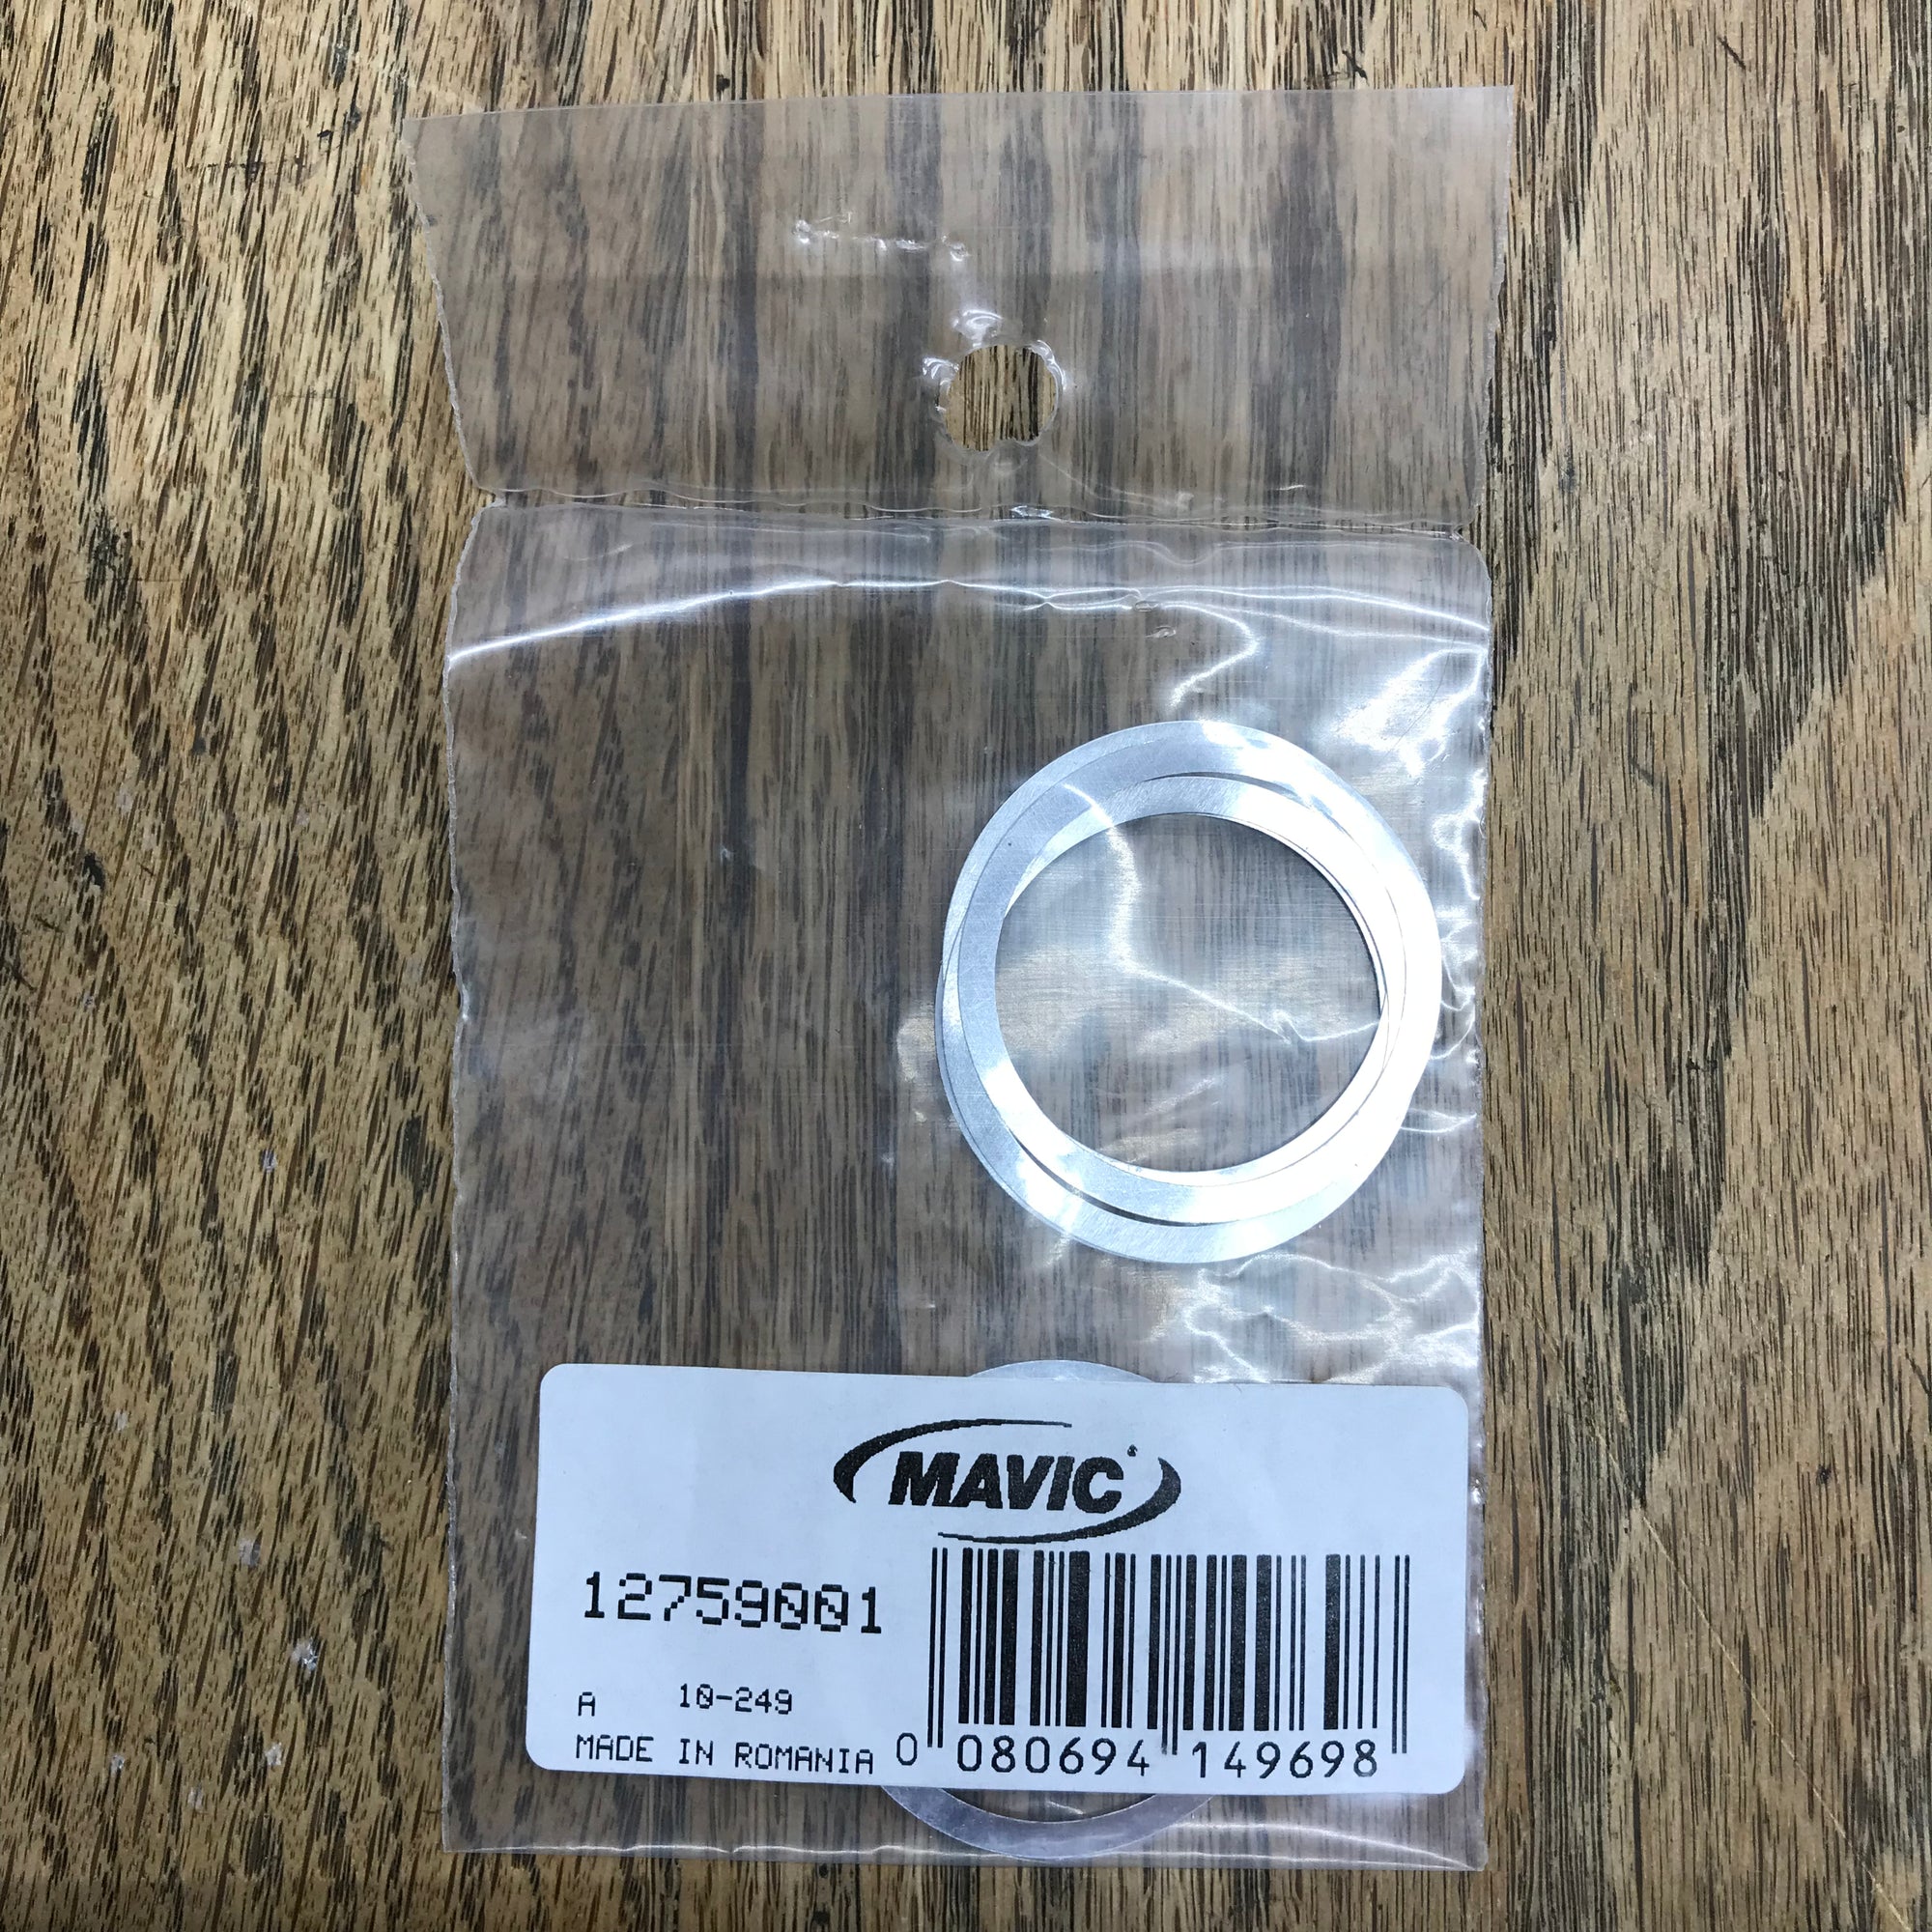 Mavic Kit of 5 Washers Spacers for Mavic Lefty Hubs - 12759001